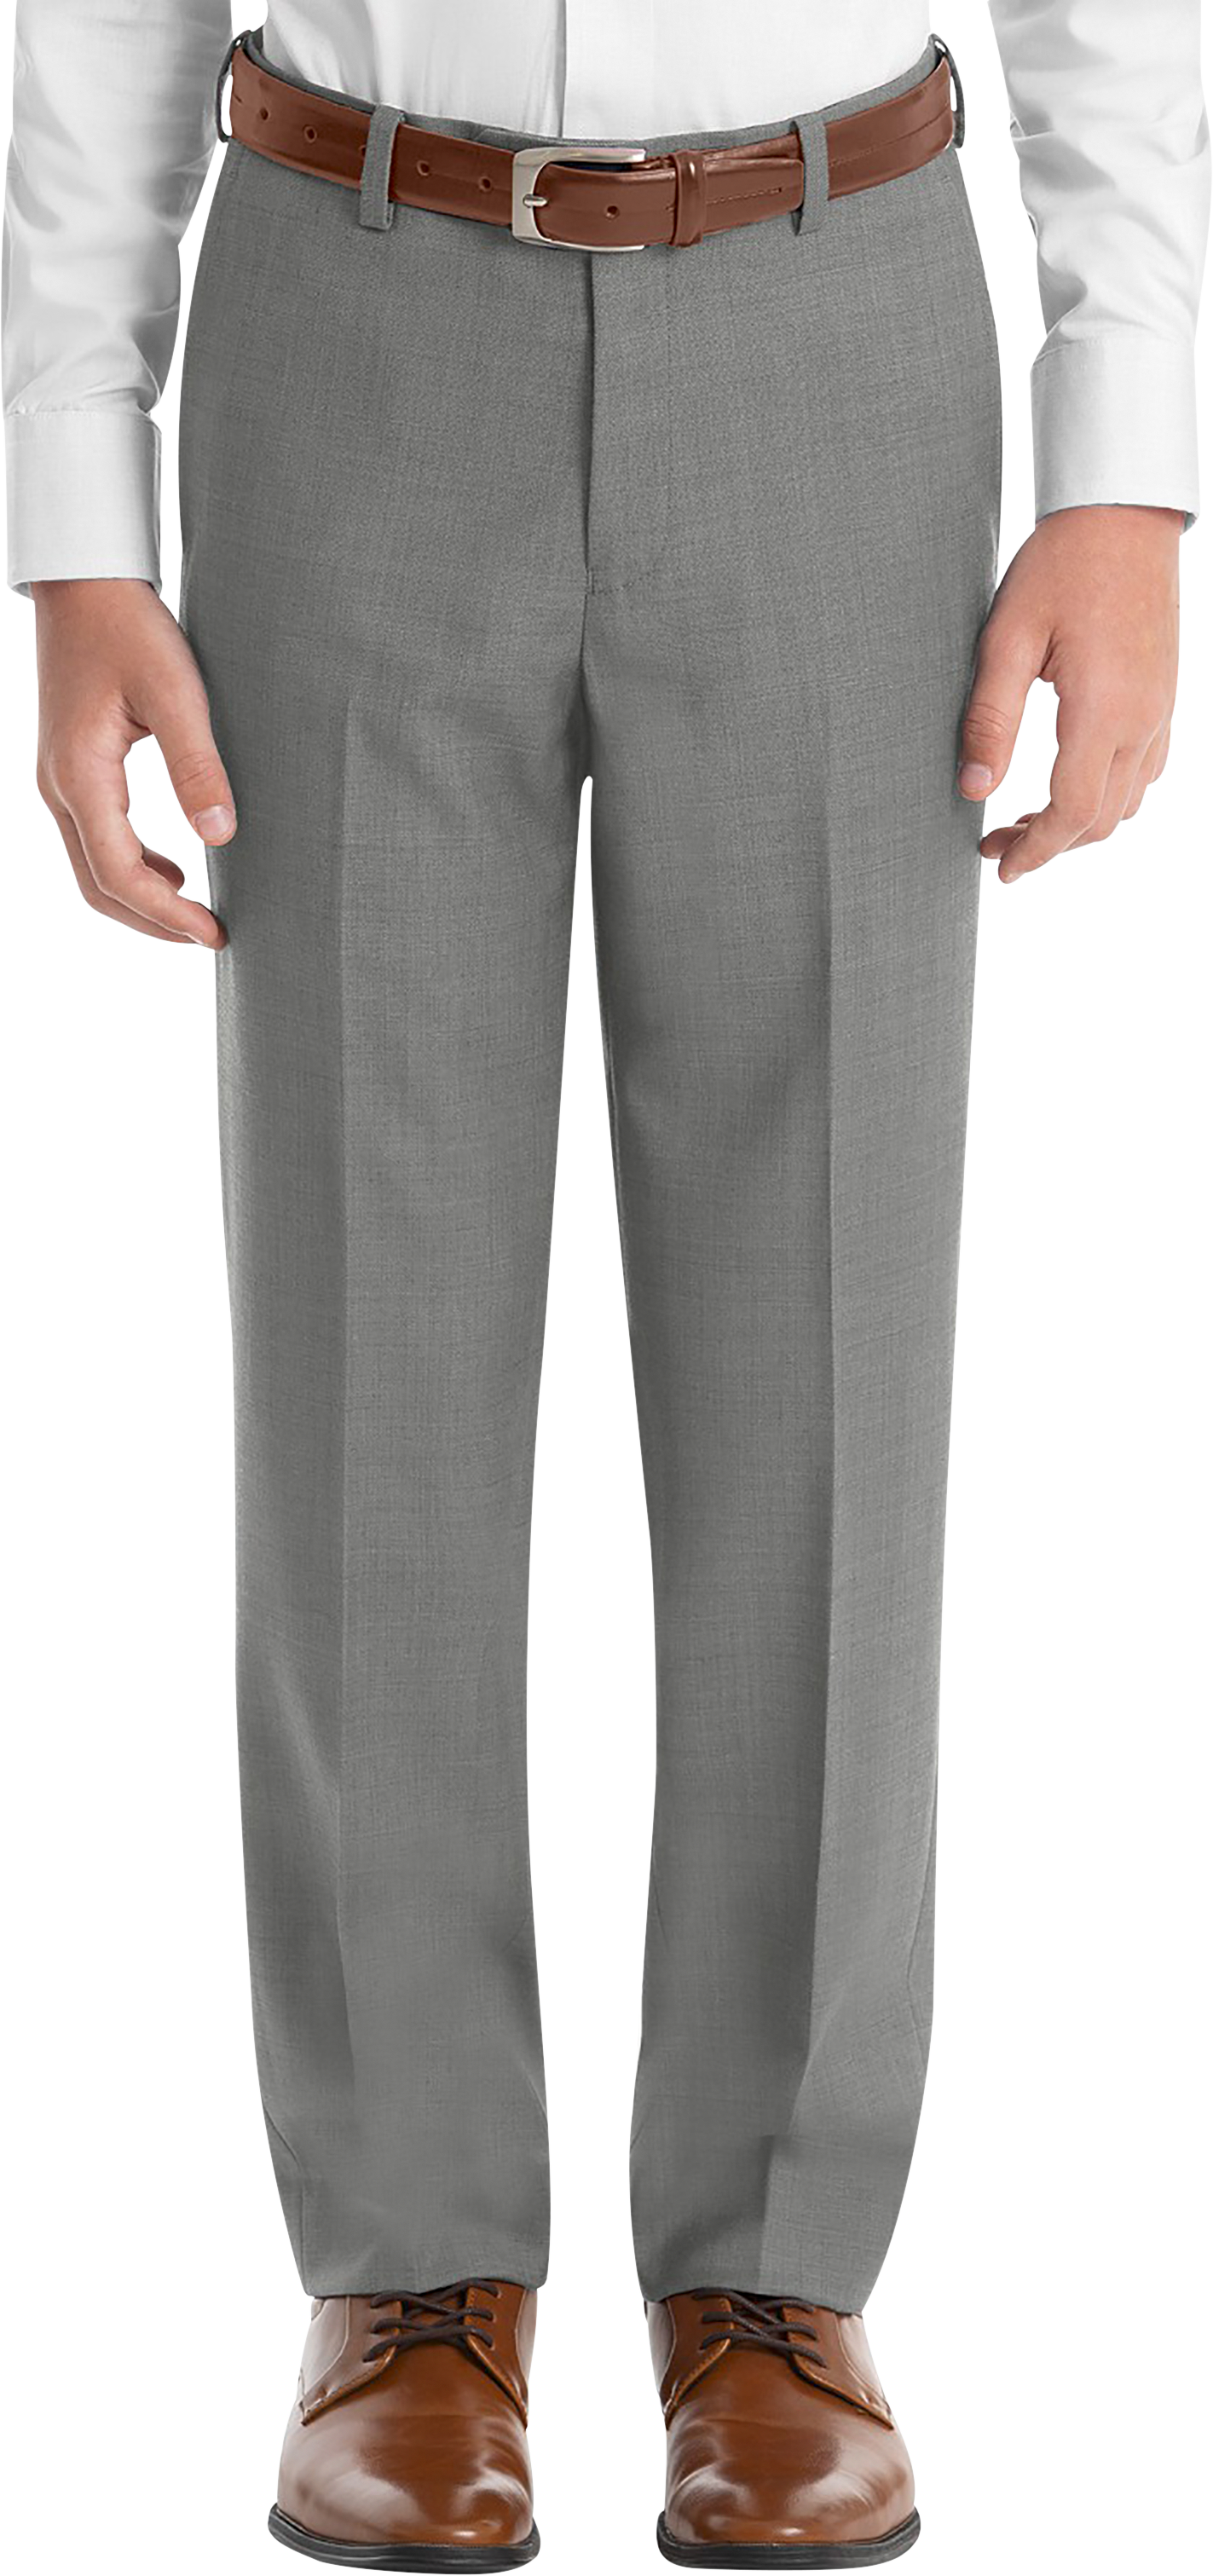 Lauren By Ralph Lauren Boys (Sizes 4-7) Suit Separates Pants, Light Gray Sharkskin